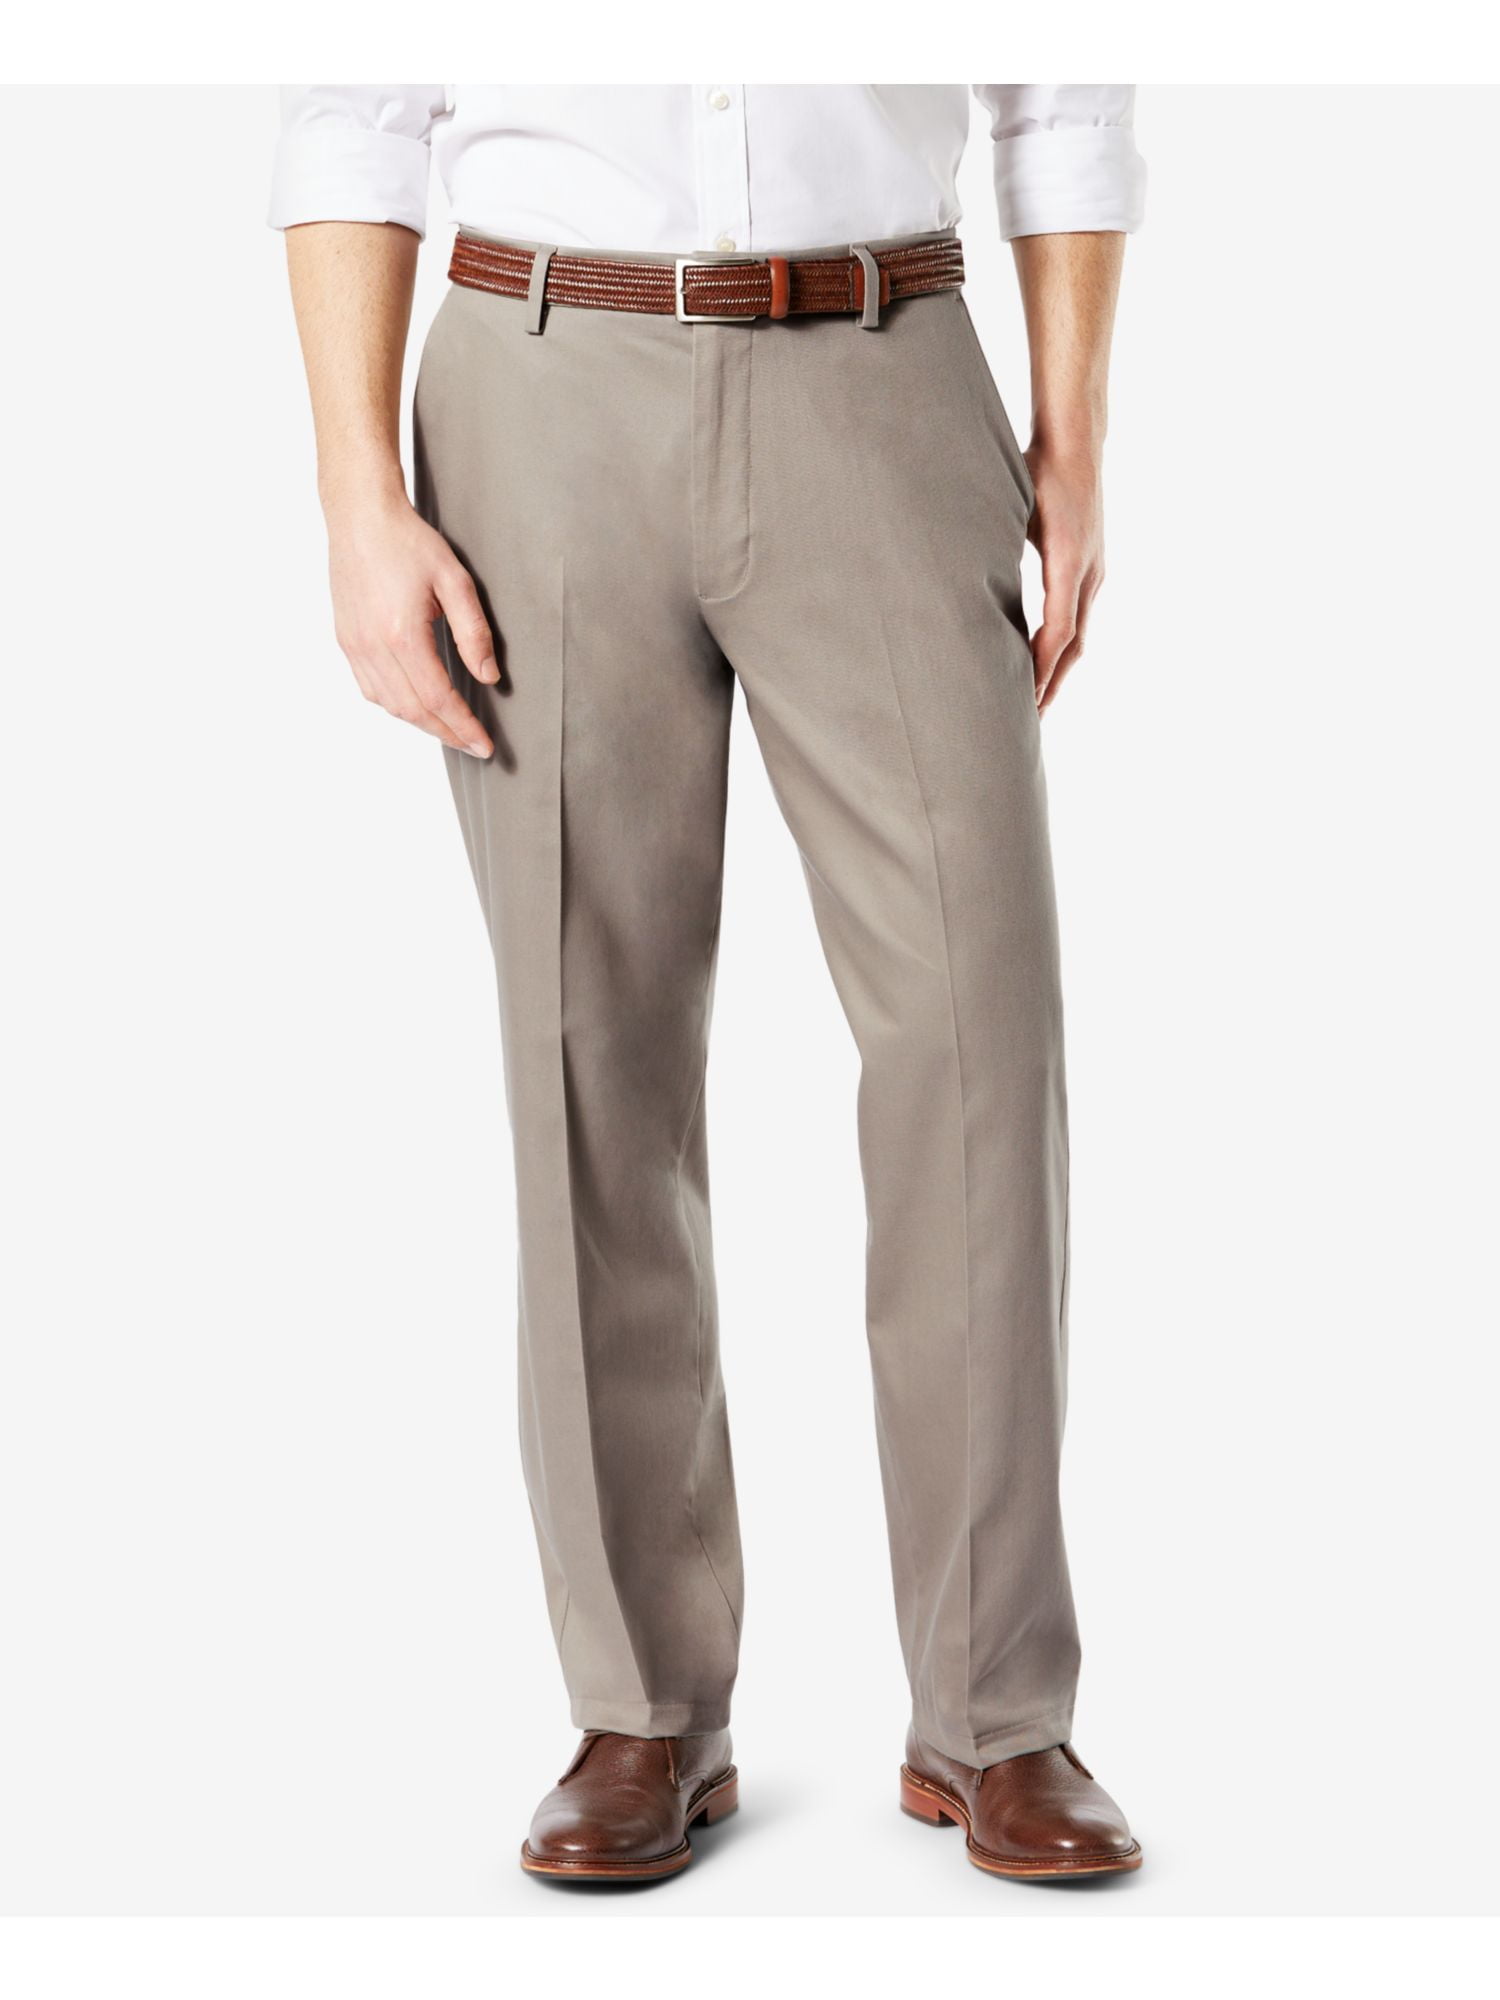 Dockers Standard No Wrinkle Khaki Flat Front Straight Fit Men's Stretch Pants 